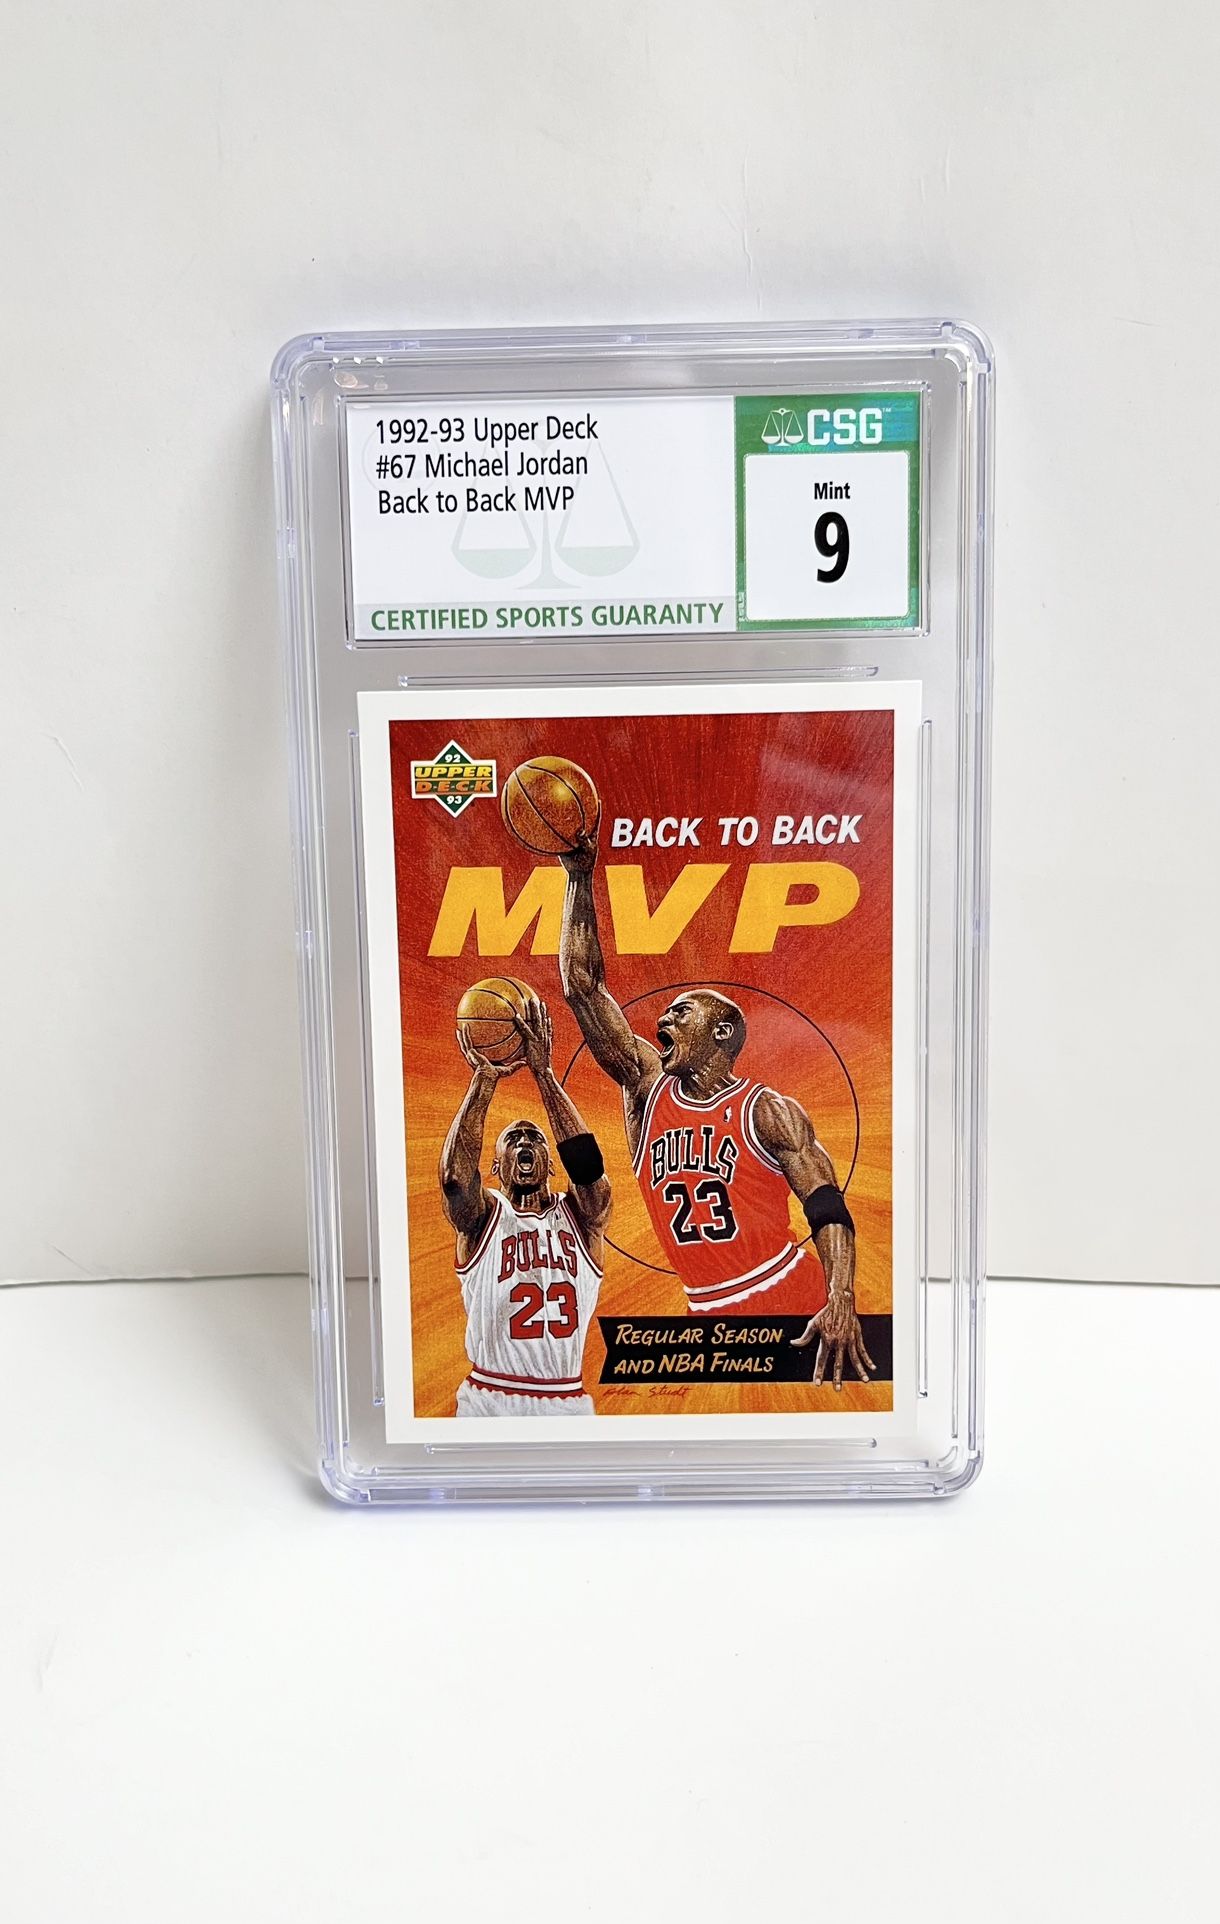 1992-93 Upper Deck #67 Michael Jordan Back To Back MVP CSG Mint 9 Basketball Card